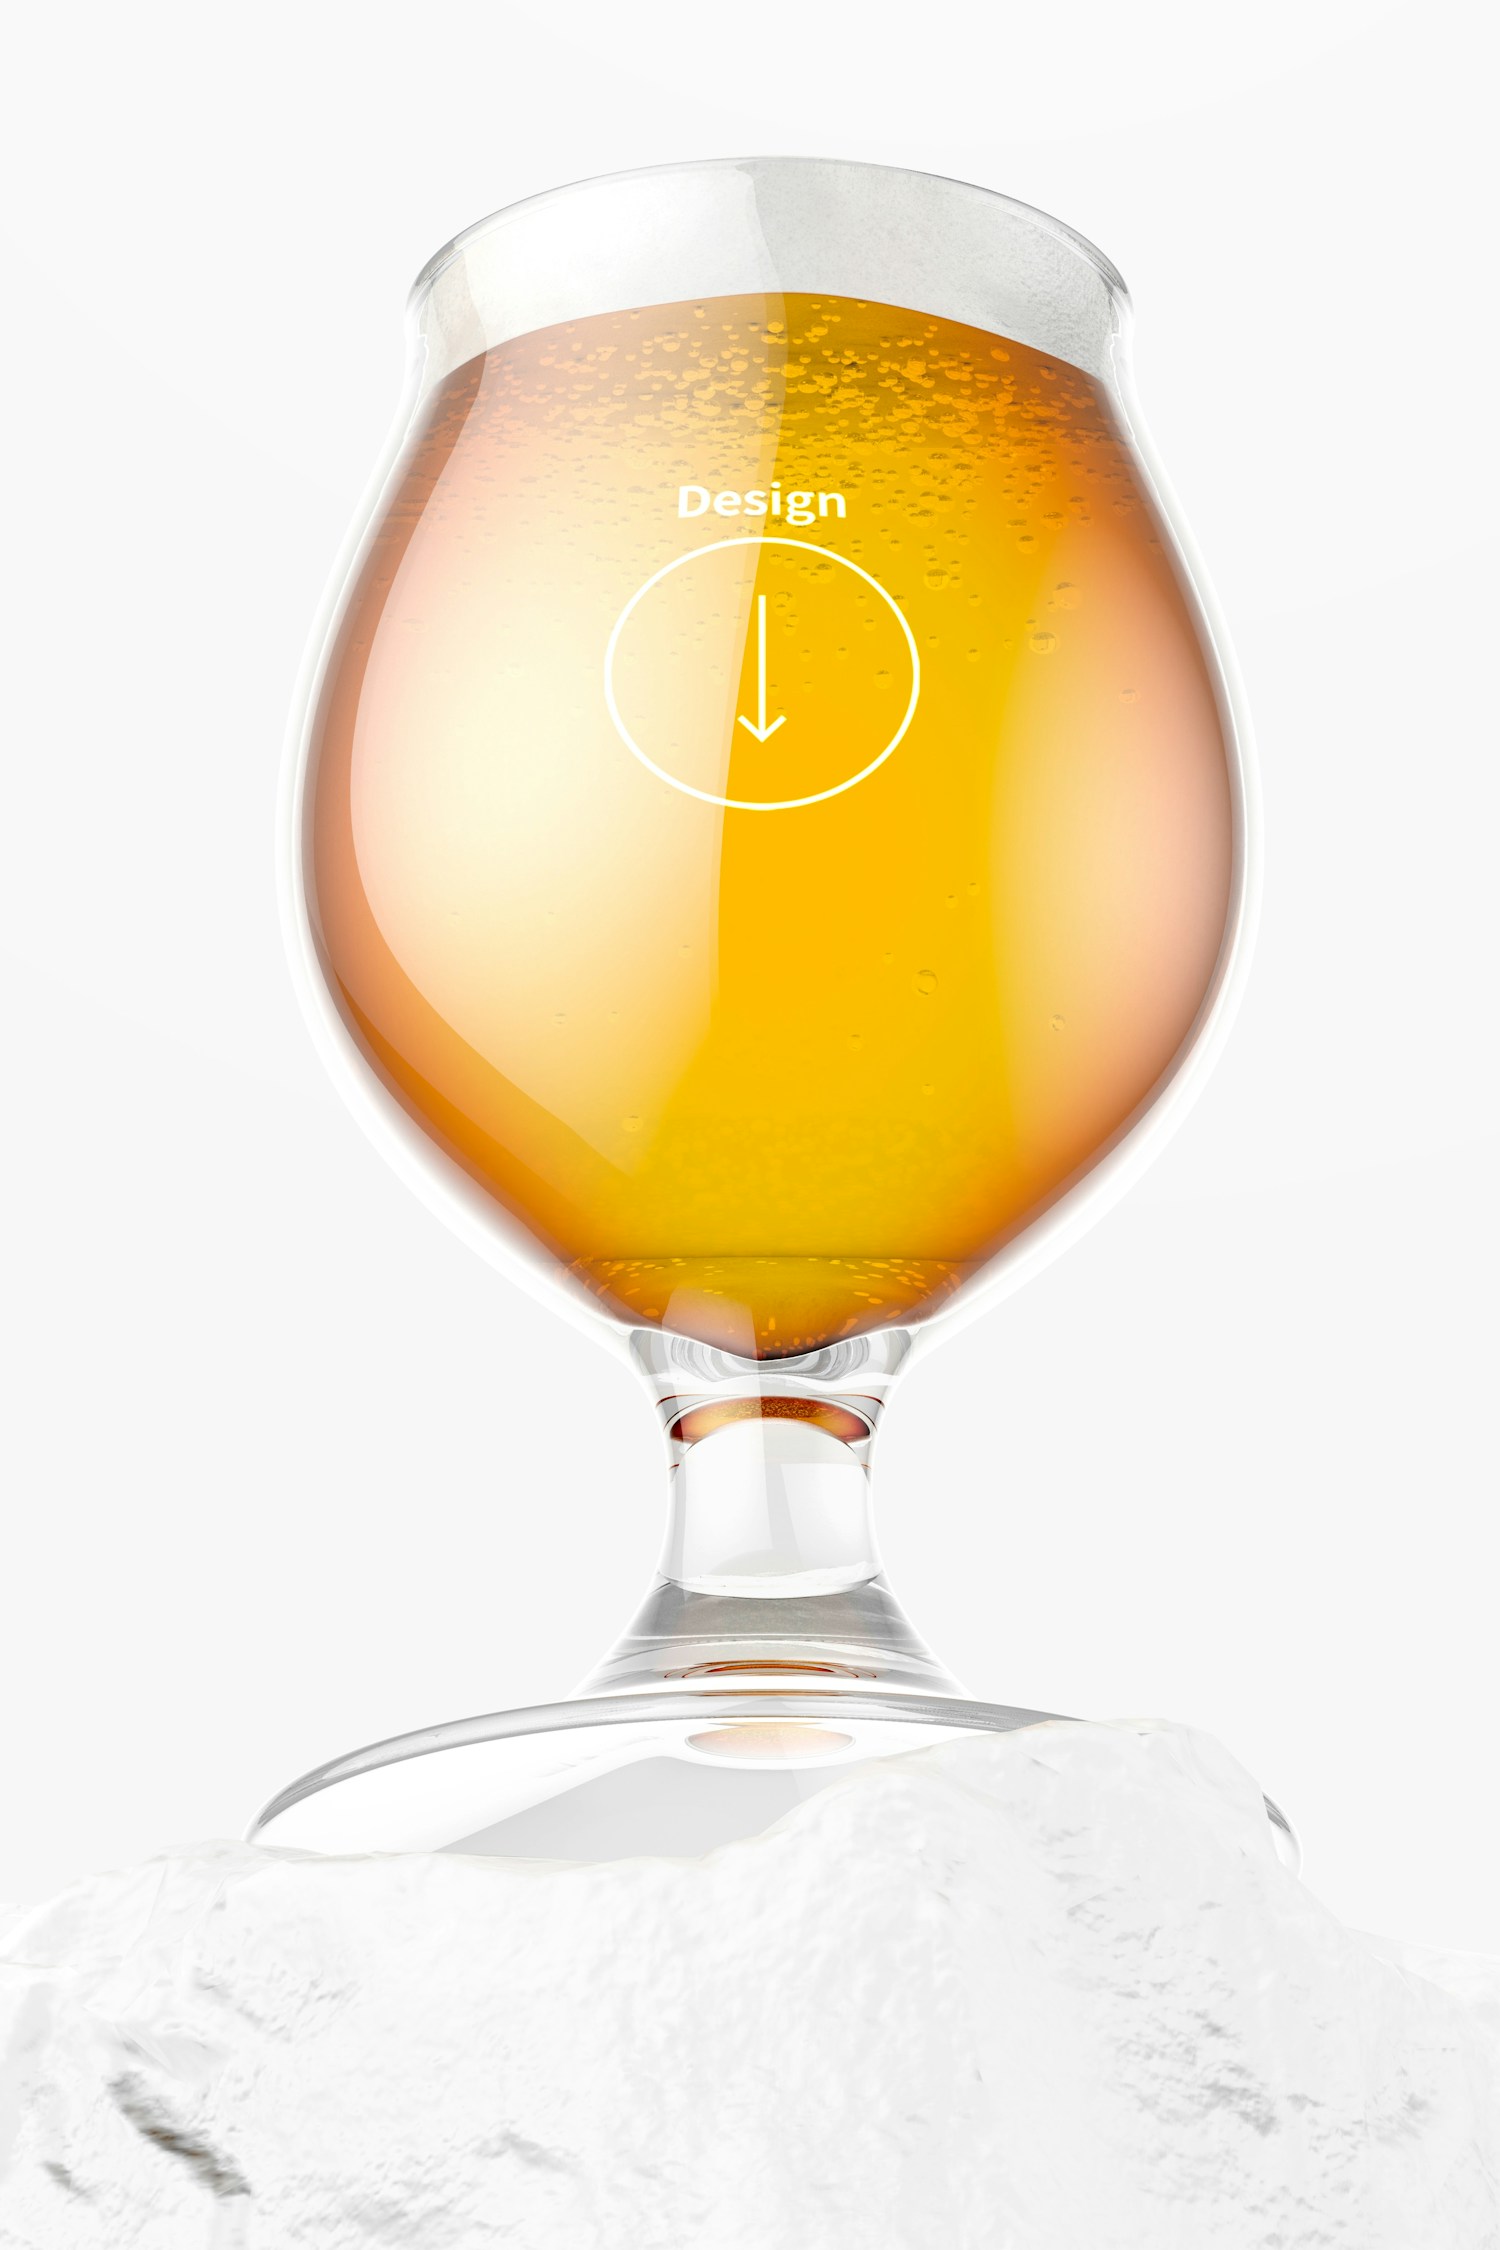 13 oz Belgian Beer Glass Mockup